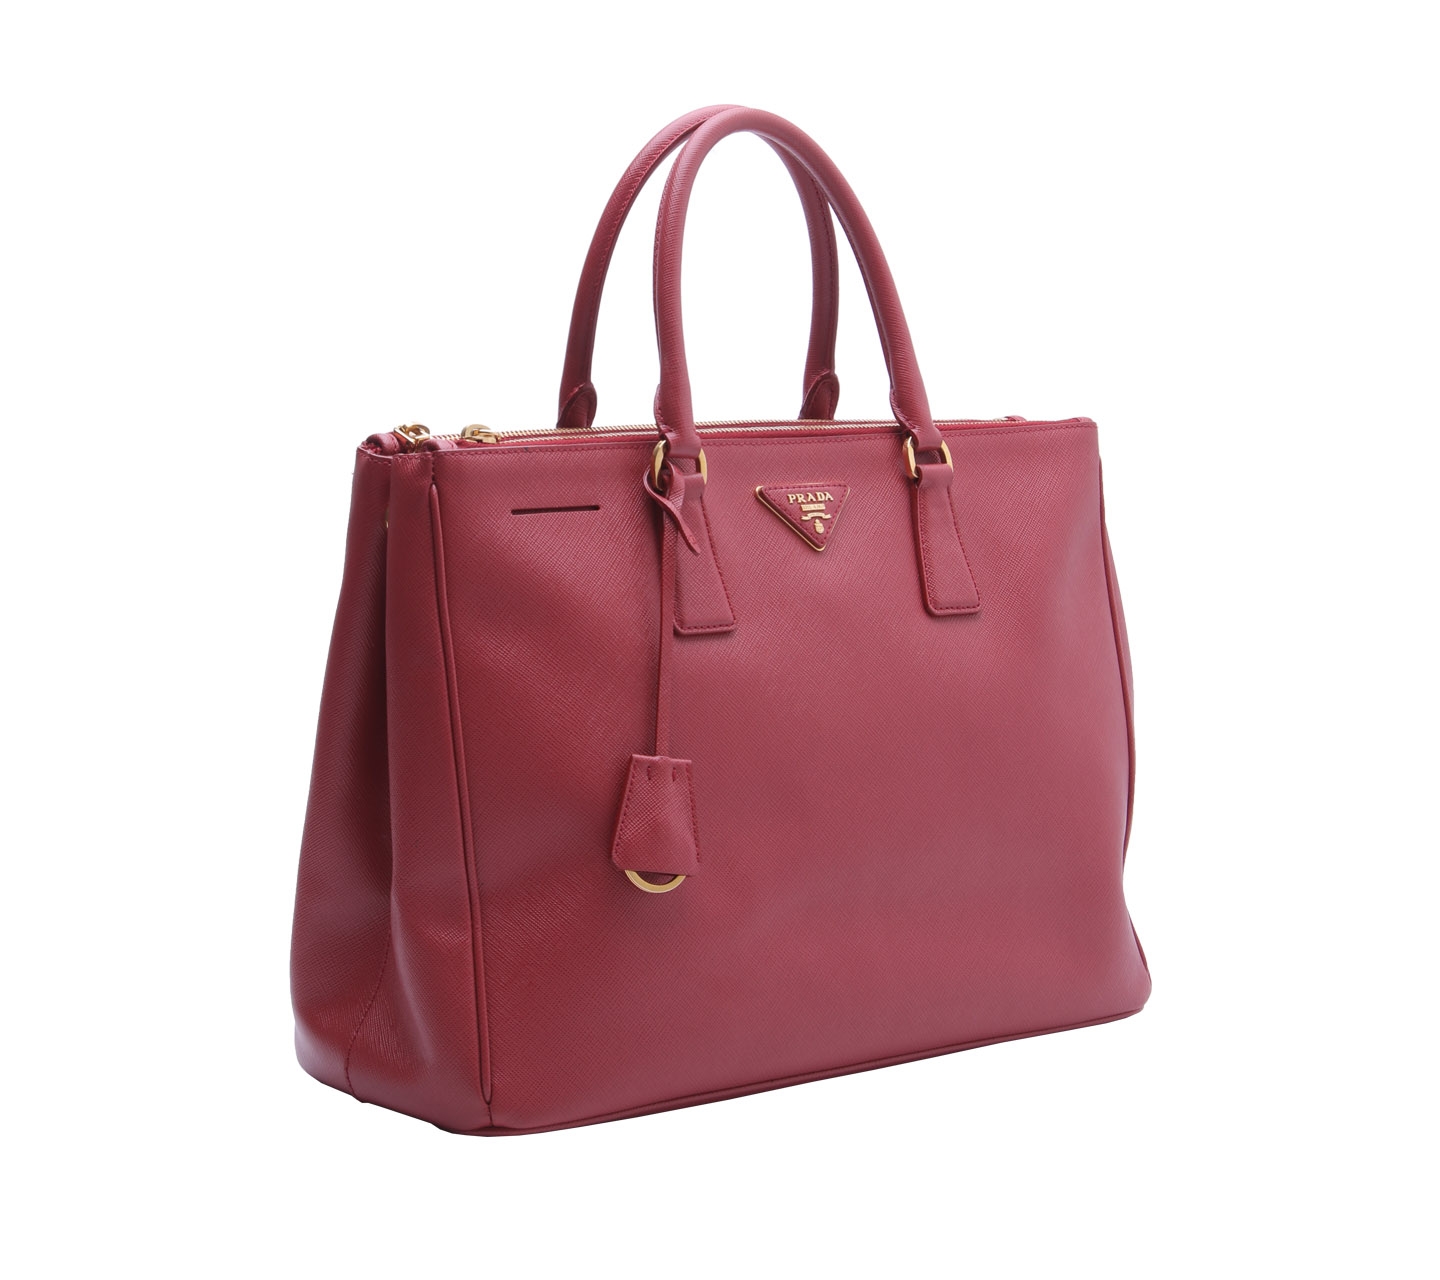 Prada Saffiano Lux Red Satchel Bag